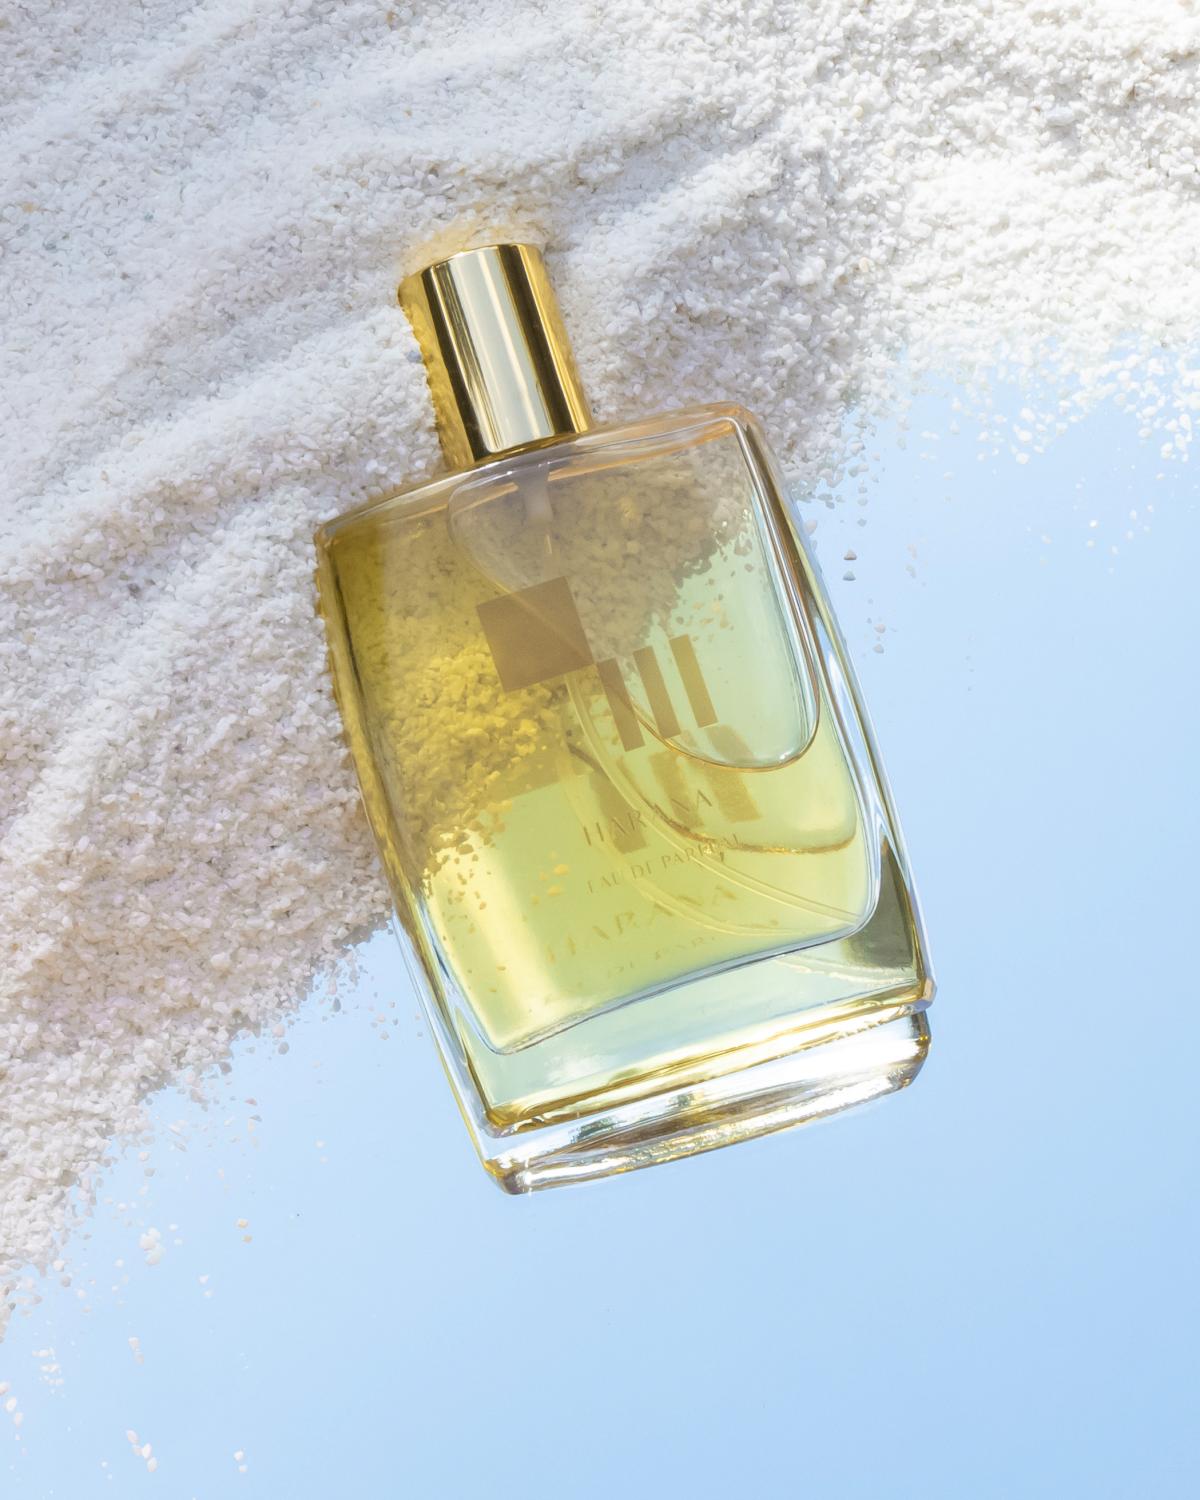 Harana Oscar Mejia III perfume - a fragrance for women and men 2019